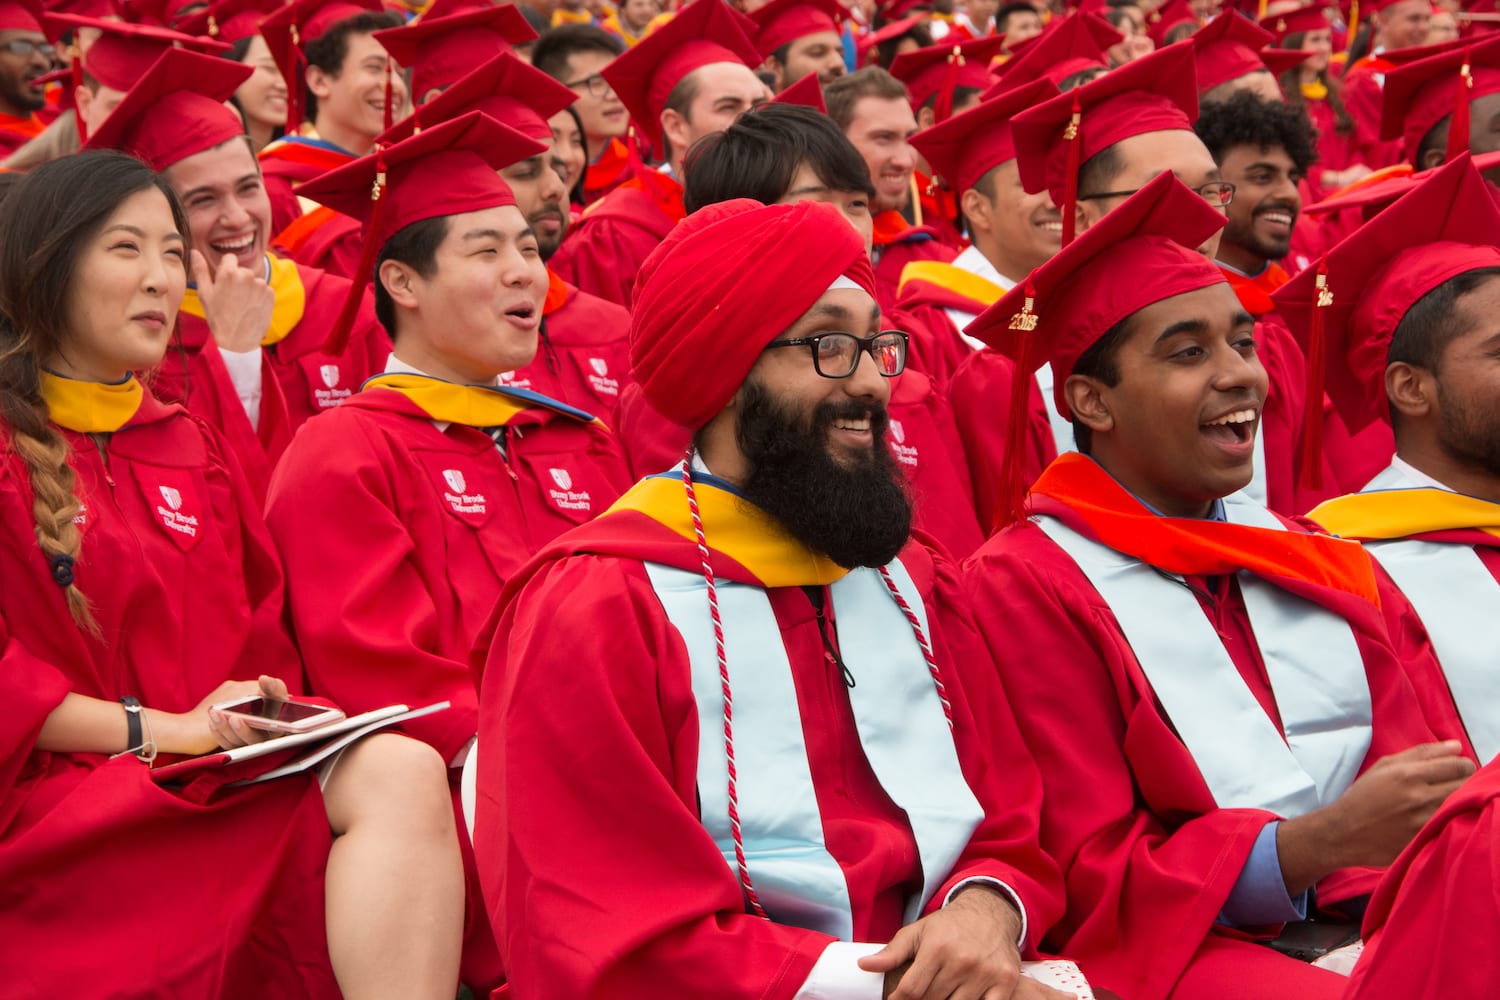 Stony Brook University graduates largest class in its history TBR